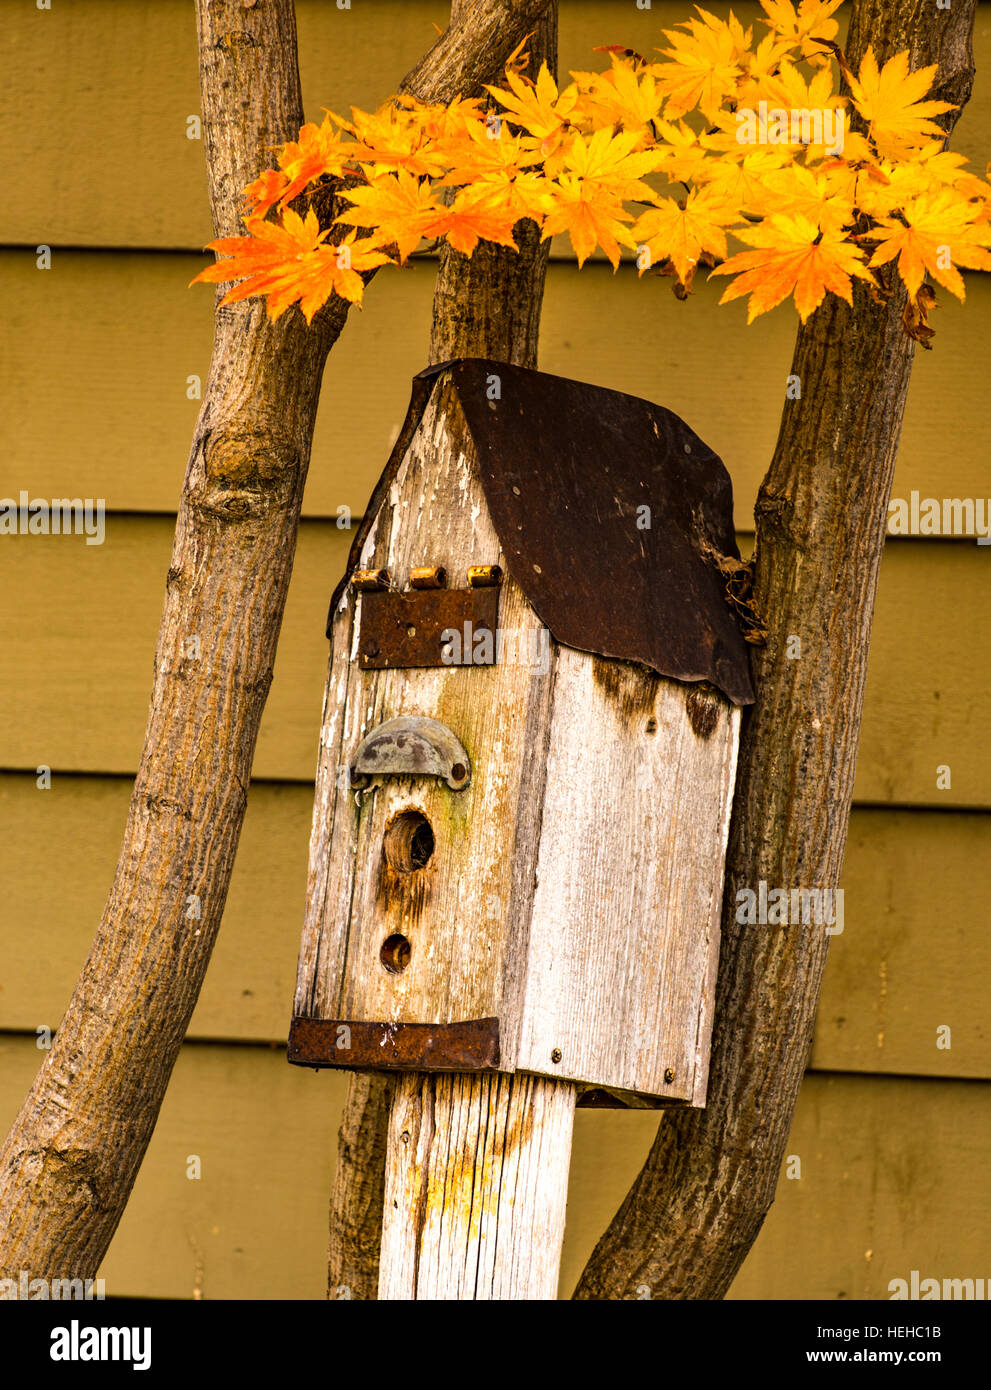 Birds, Autumn colors of a sweet gum tree and bird box in backyard of neighborhood. Idaho, USA Stock Photo